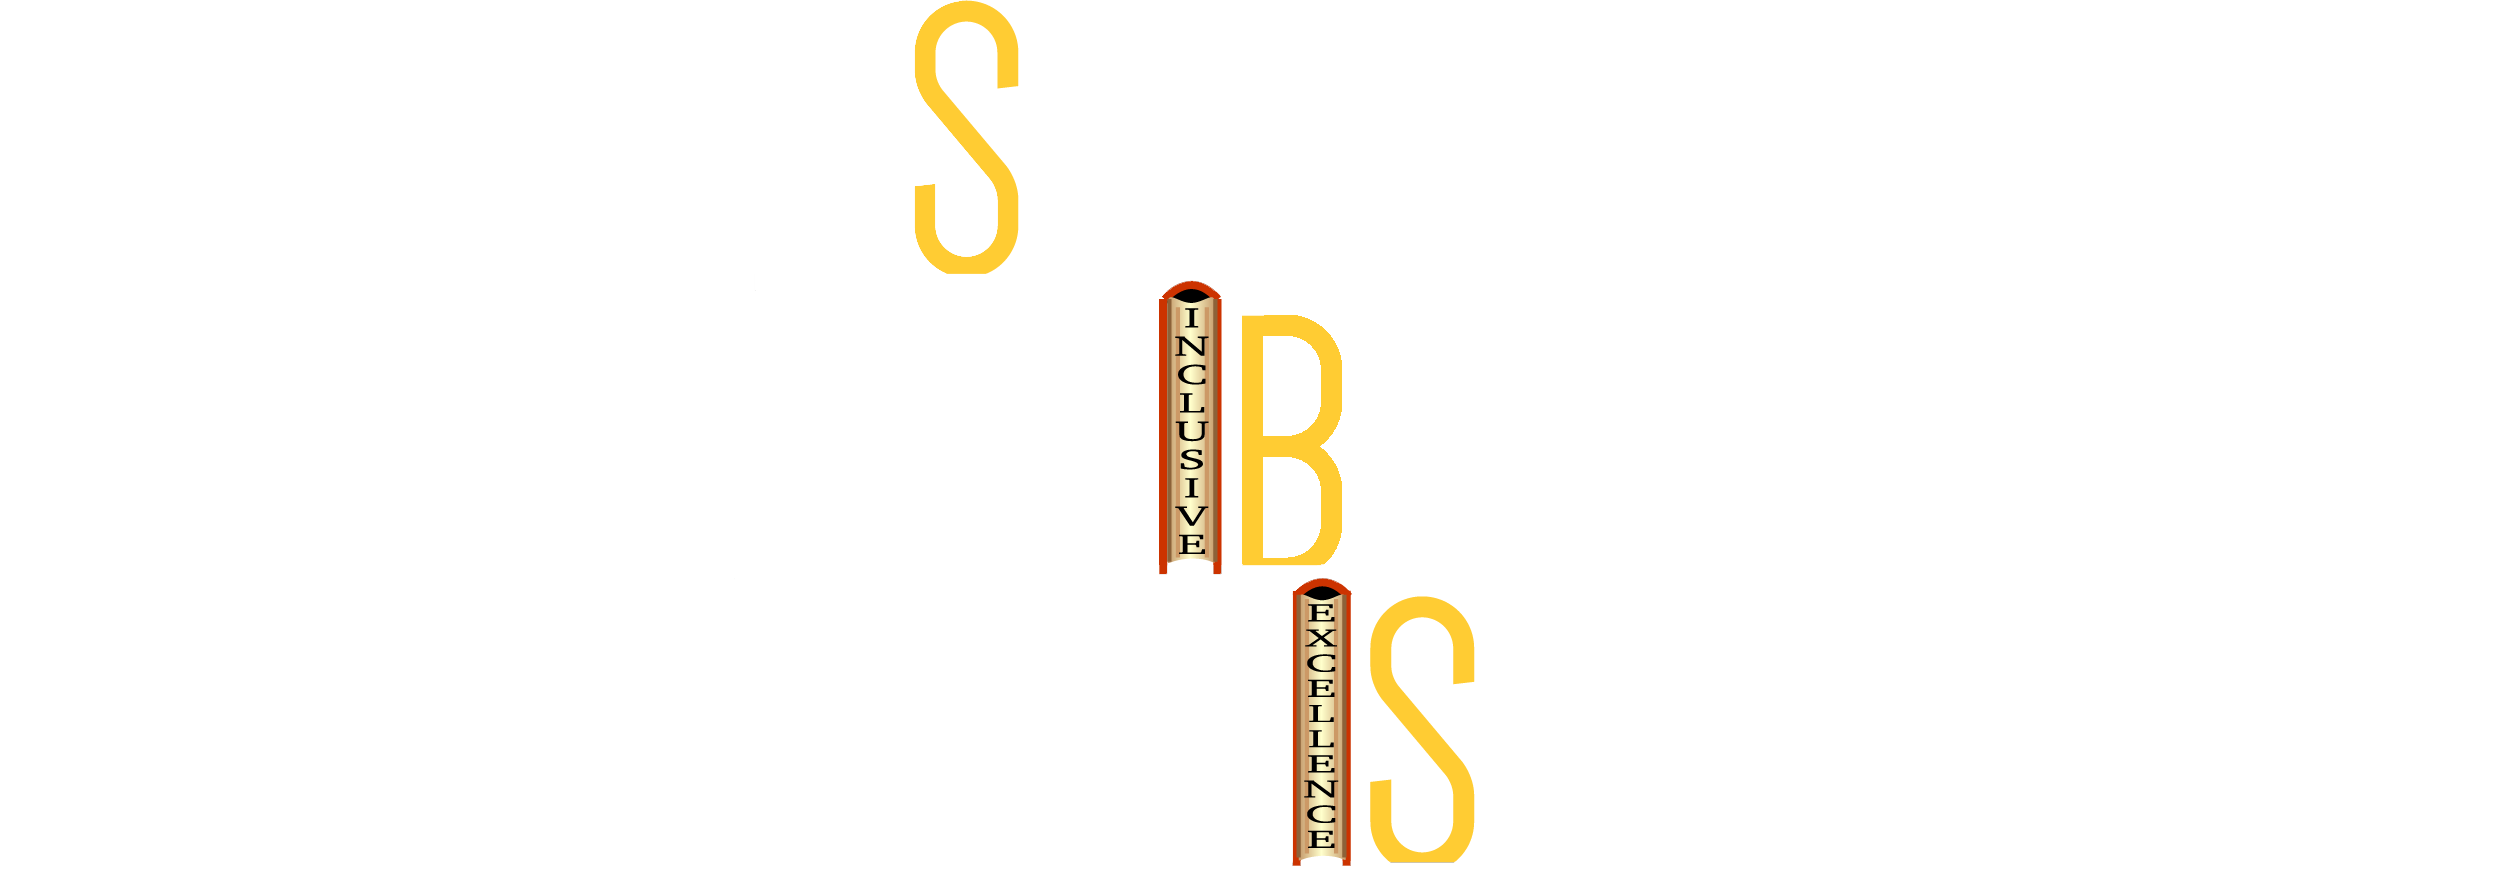 Steps Beyond Statements